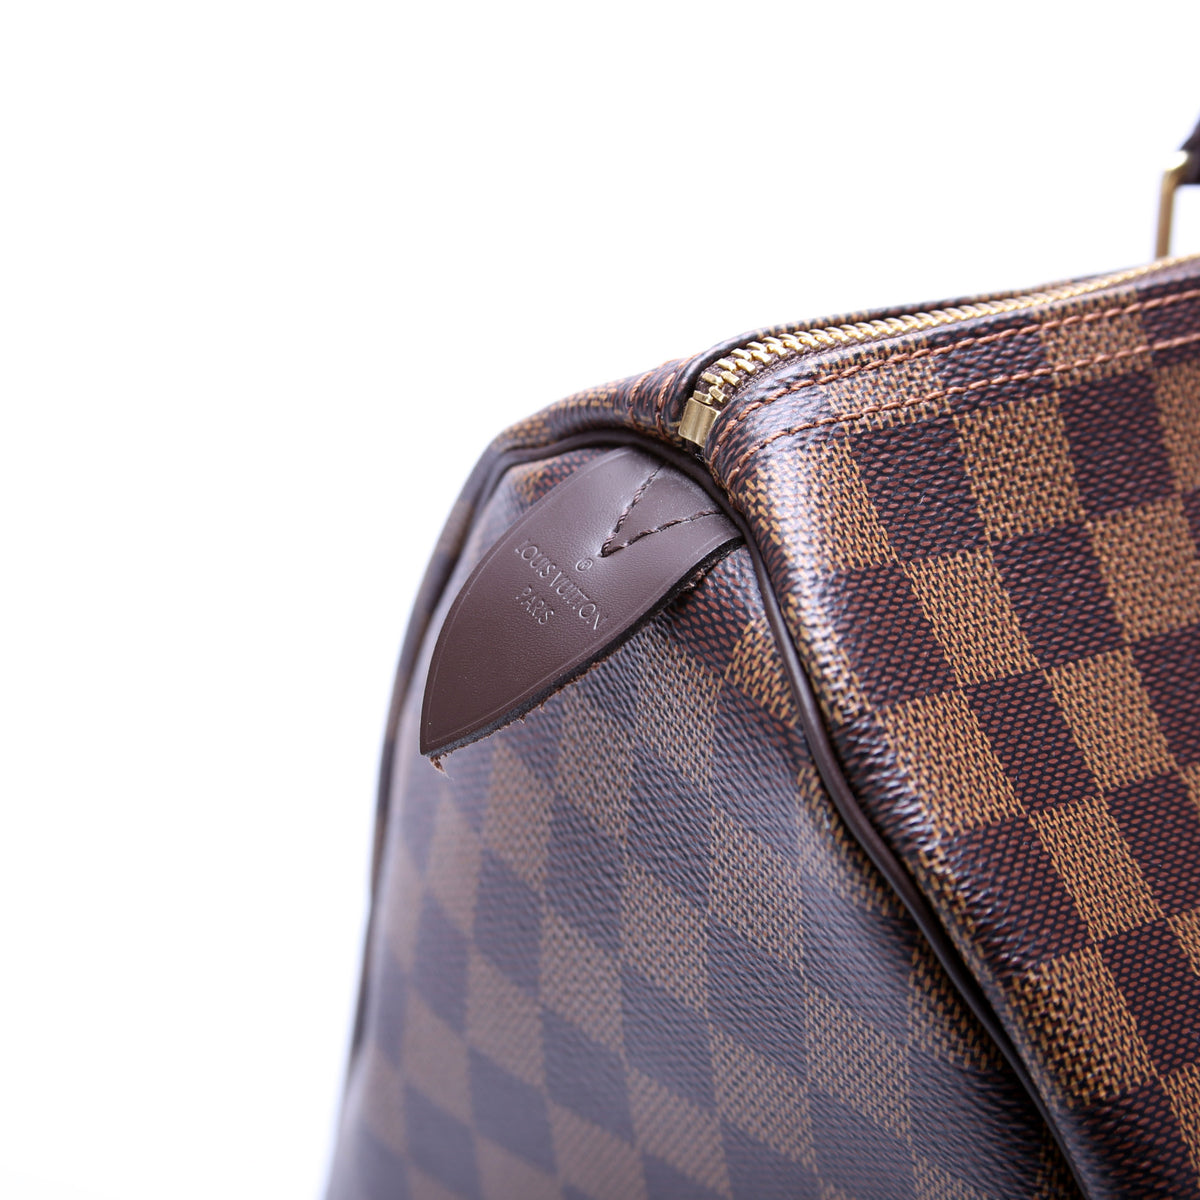 Louis Vuitton Brown Damier Ebene Speedy 35 Top Handle / Satchel (pre-owned), Handbags, Clothing & Accessories